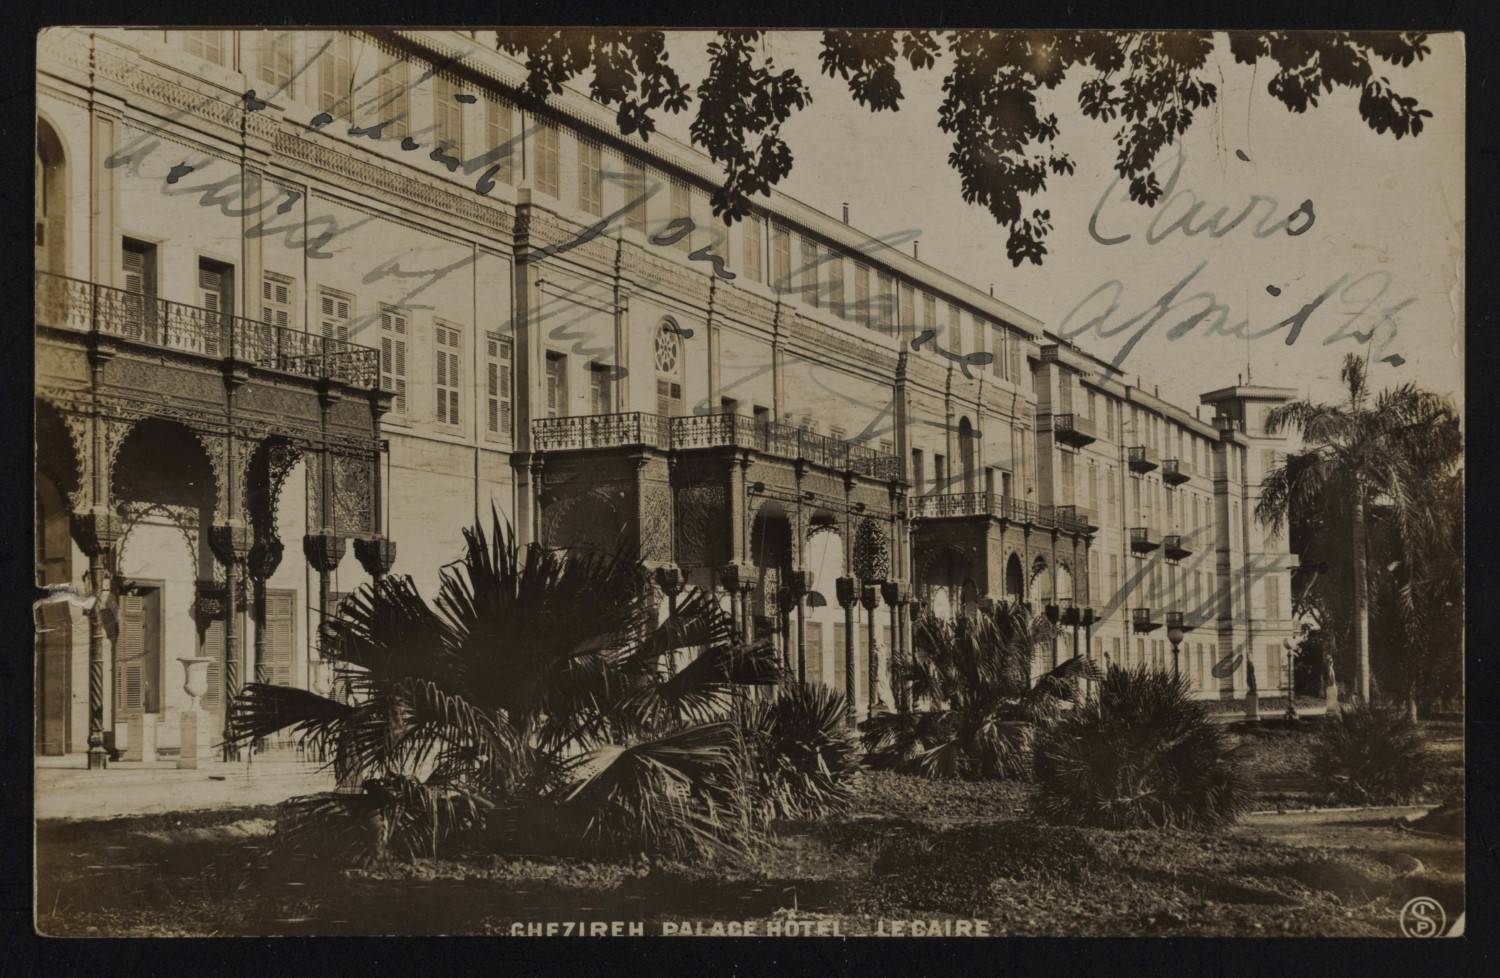 Postcard of Ghezireh Palace Hotel, Cairo